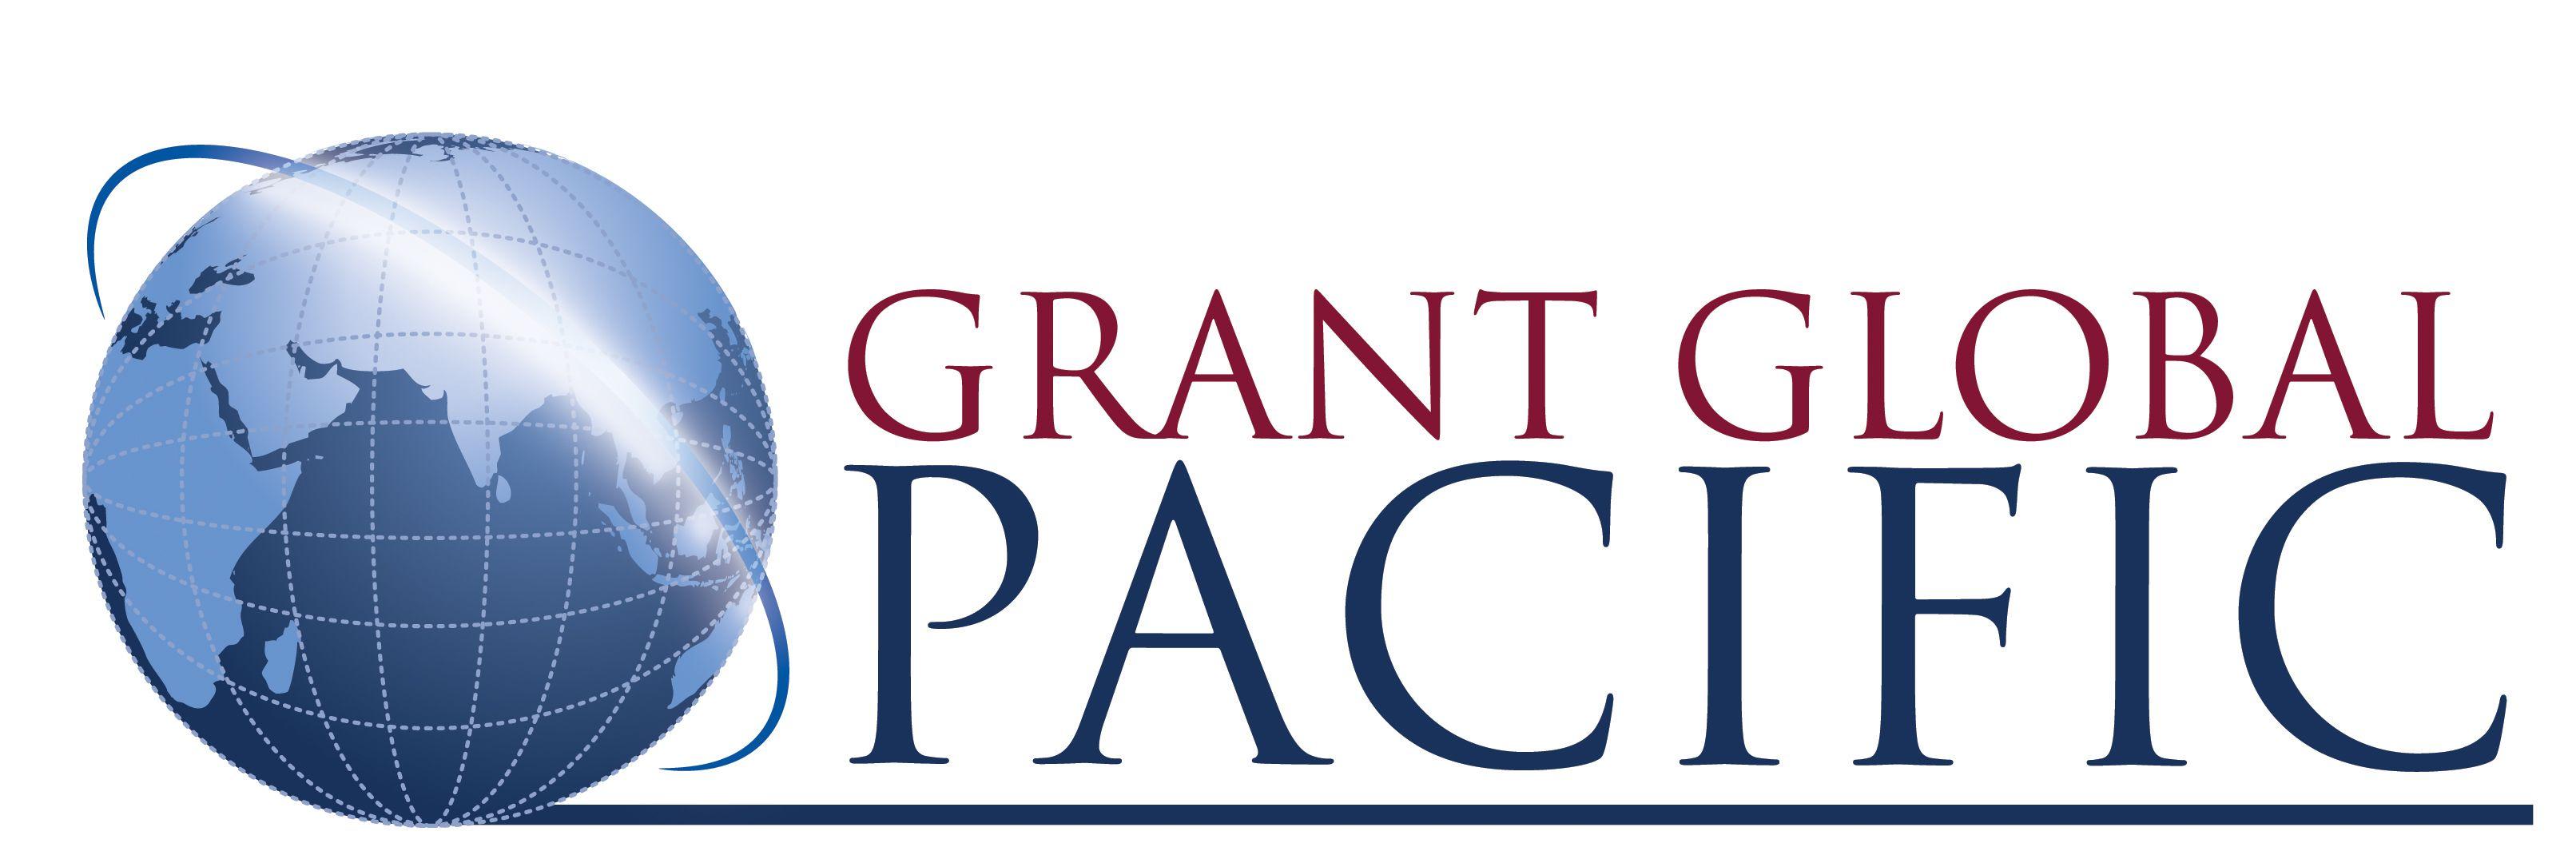 Pacific Globe Logo - Grant Global Pacific – Logo – Nashville Graphic Designer | Franklin ...